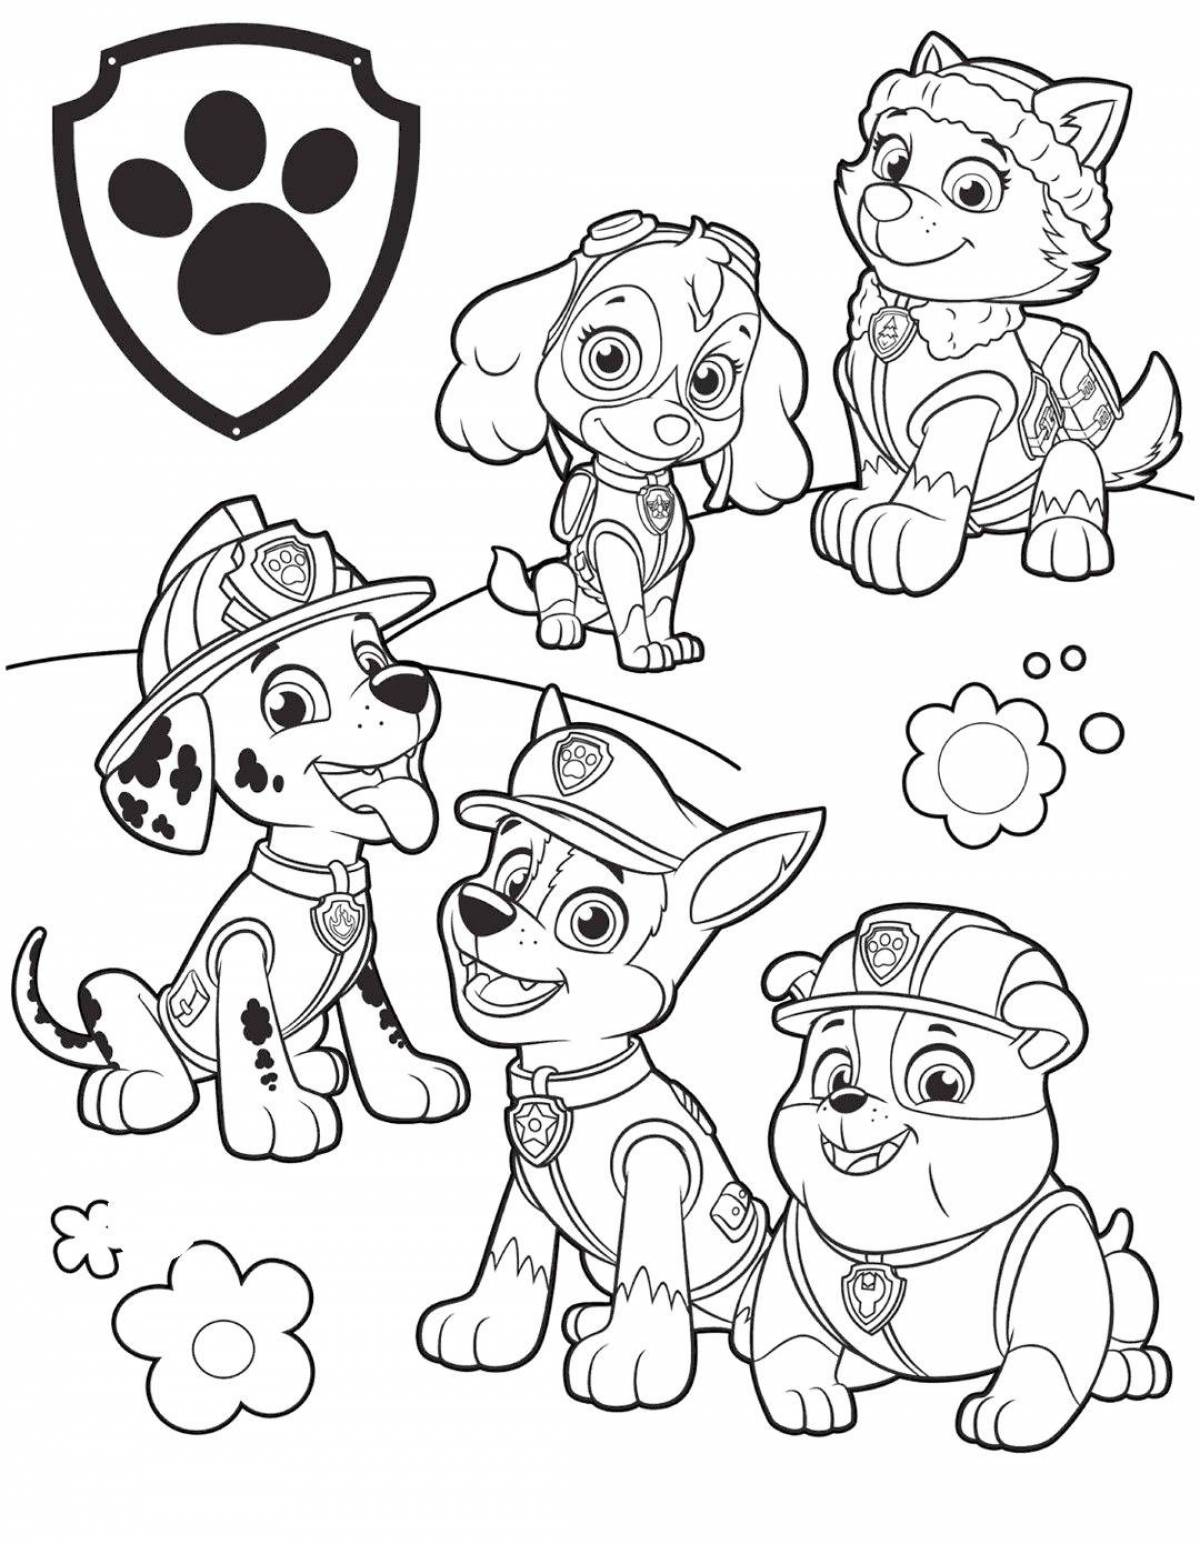 Incredible Paw Patrol coloring book for kids